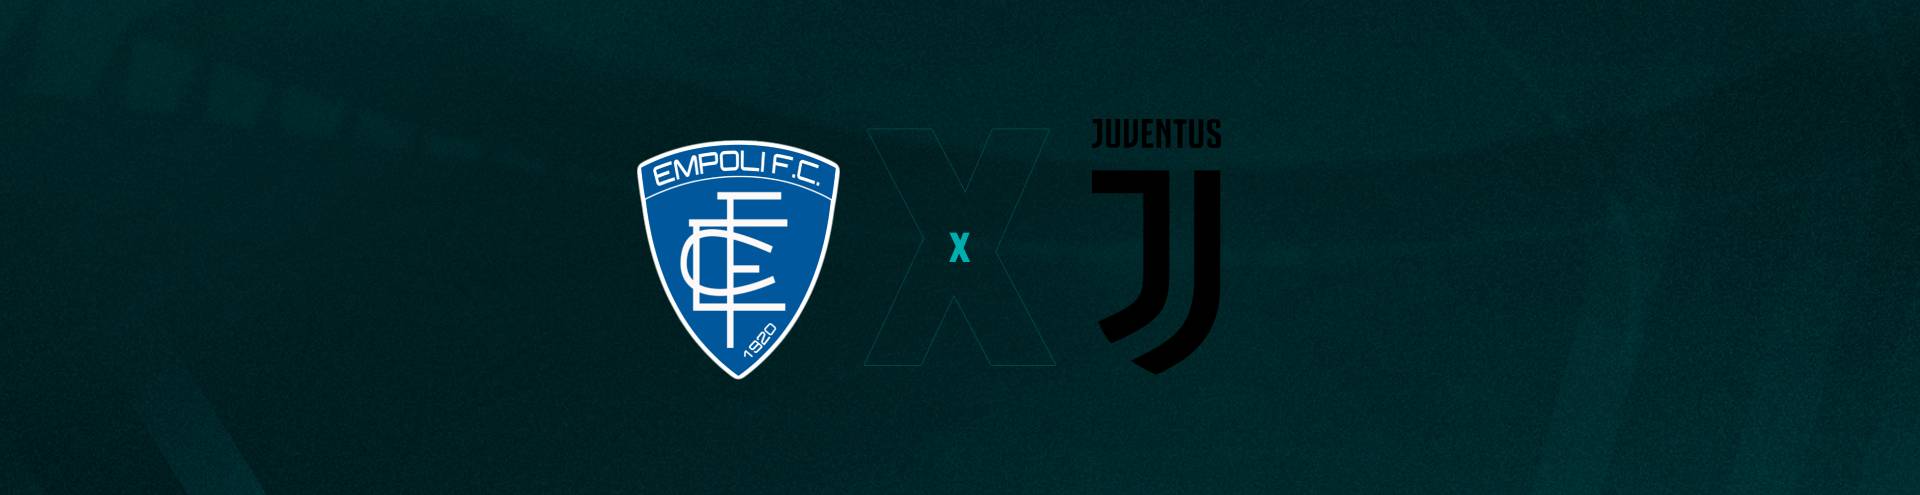 Empoli x Juventus: Palpites pelo Campeonato Italiano – 3/9